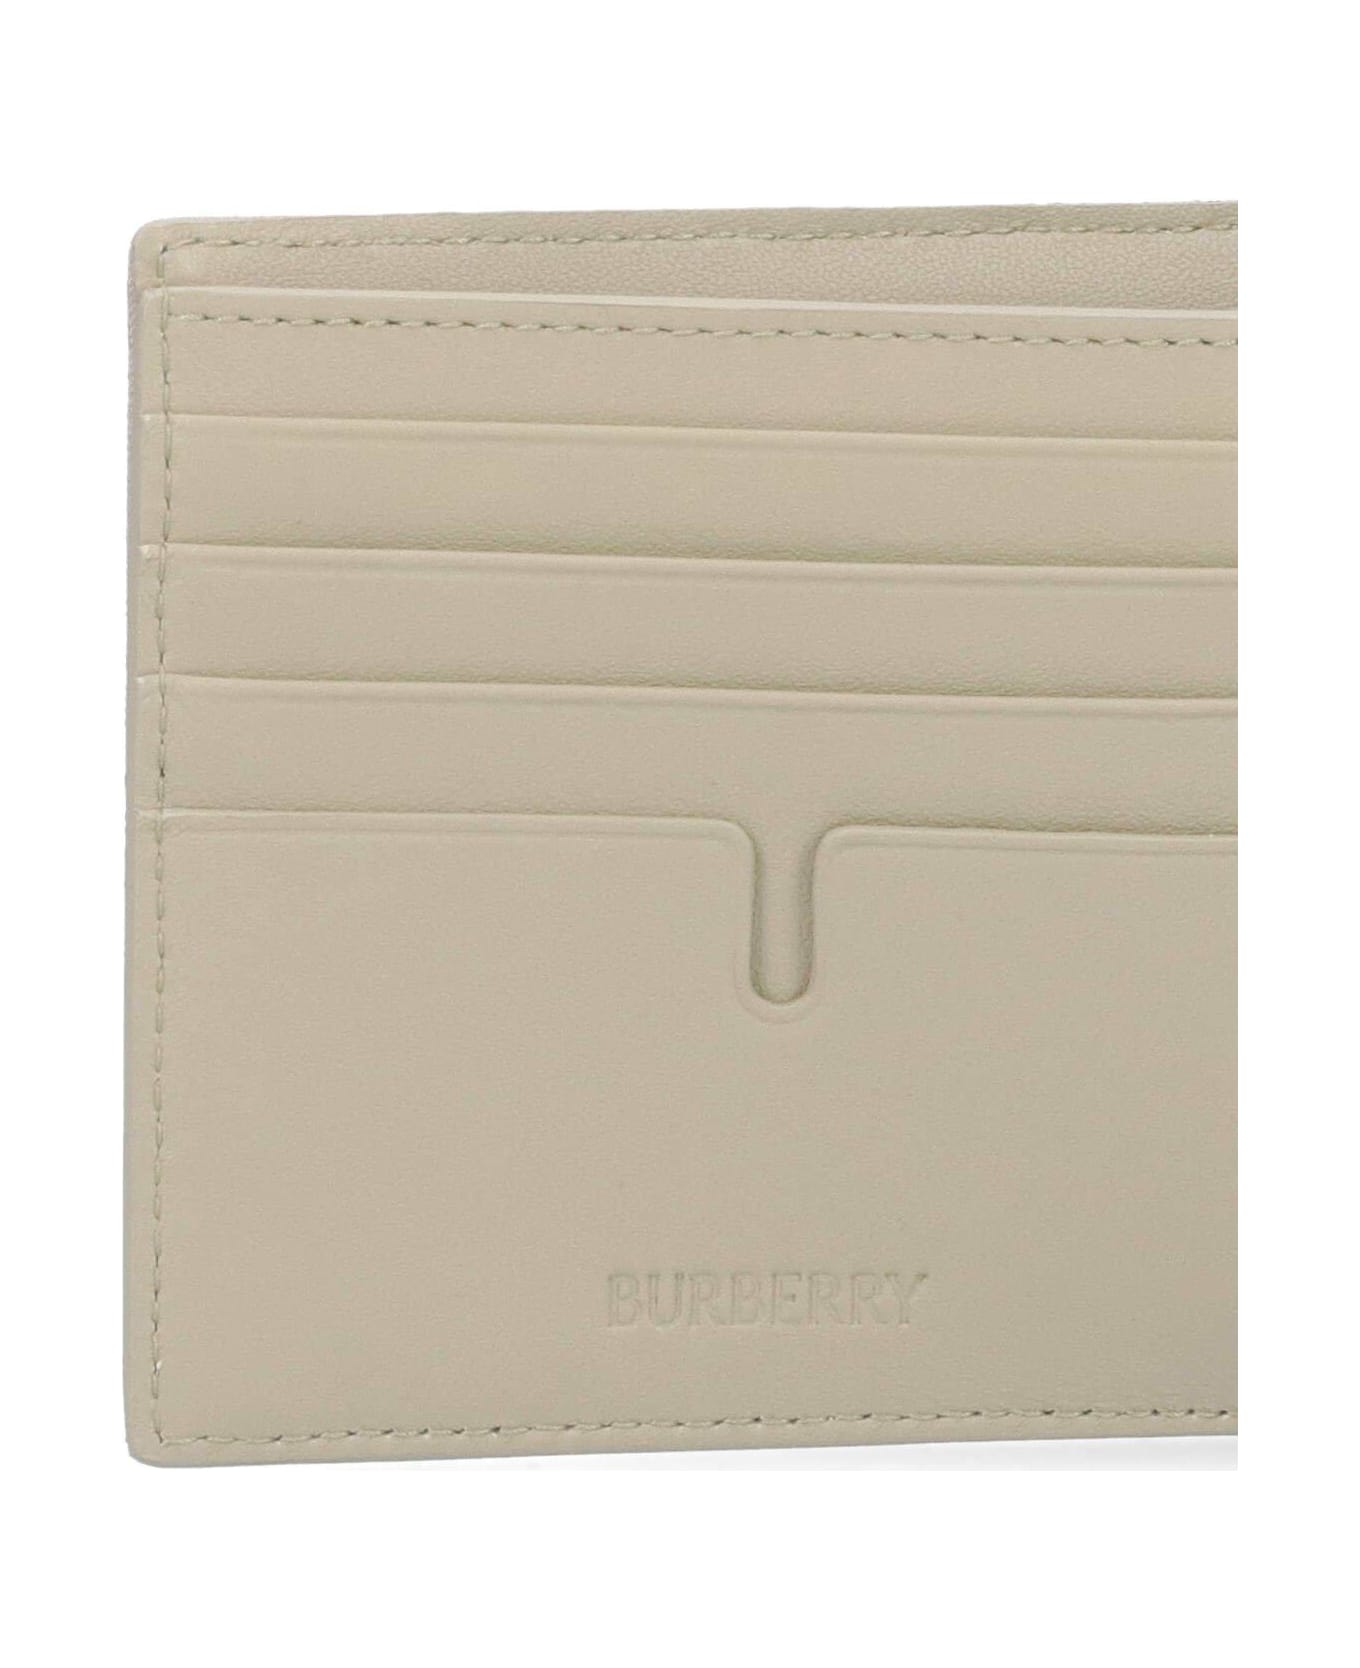 Burberry Check Printed Bi-fold Wallet - Lichen